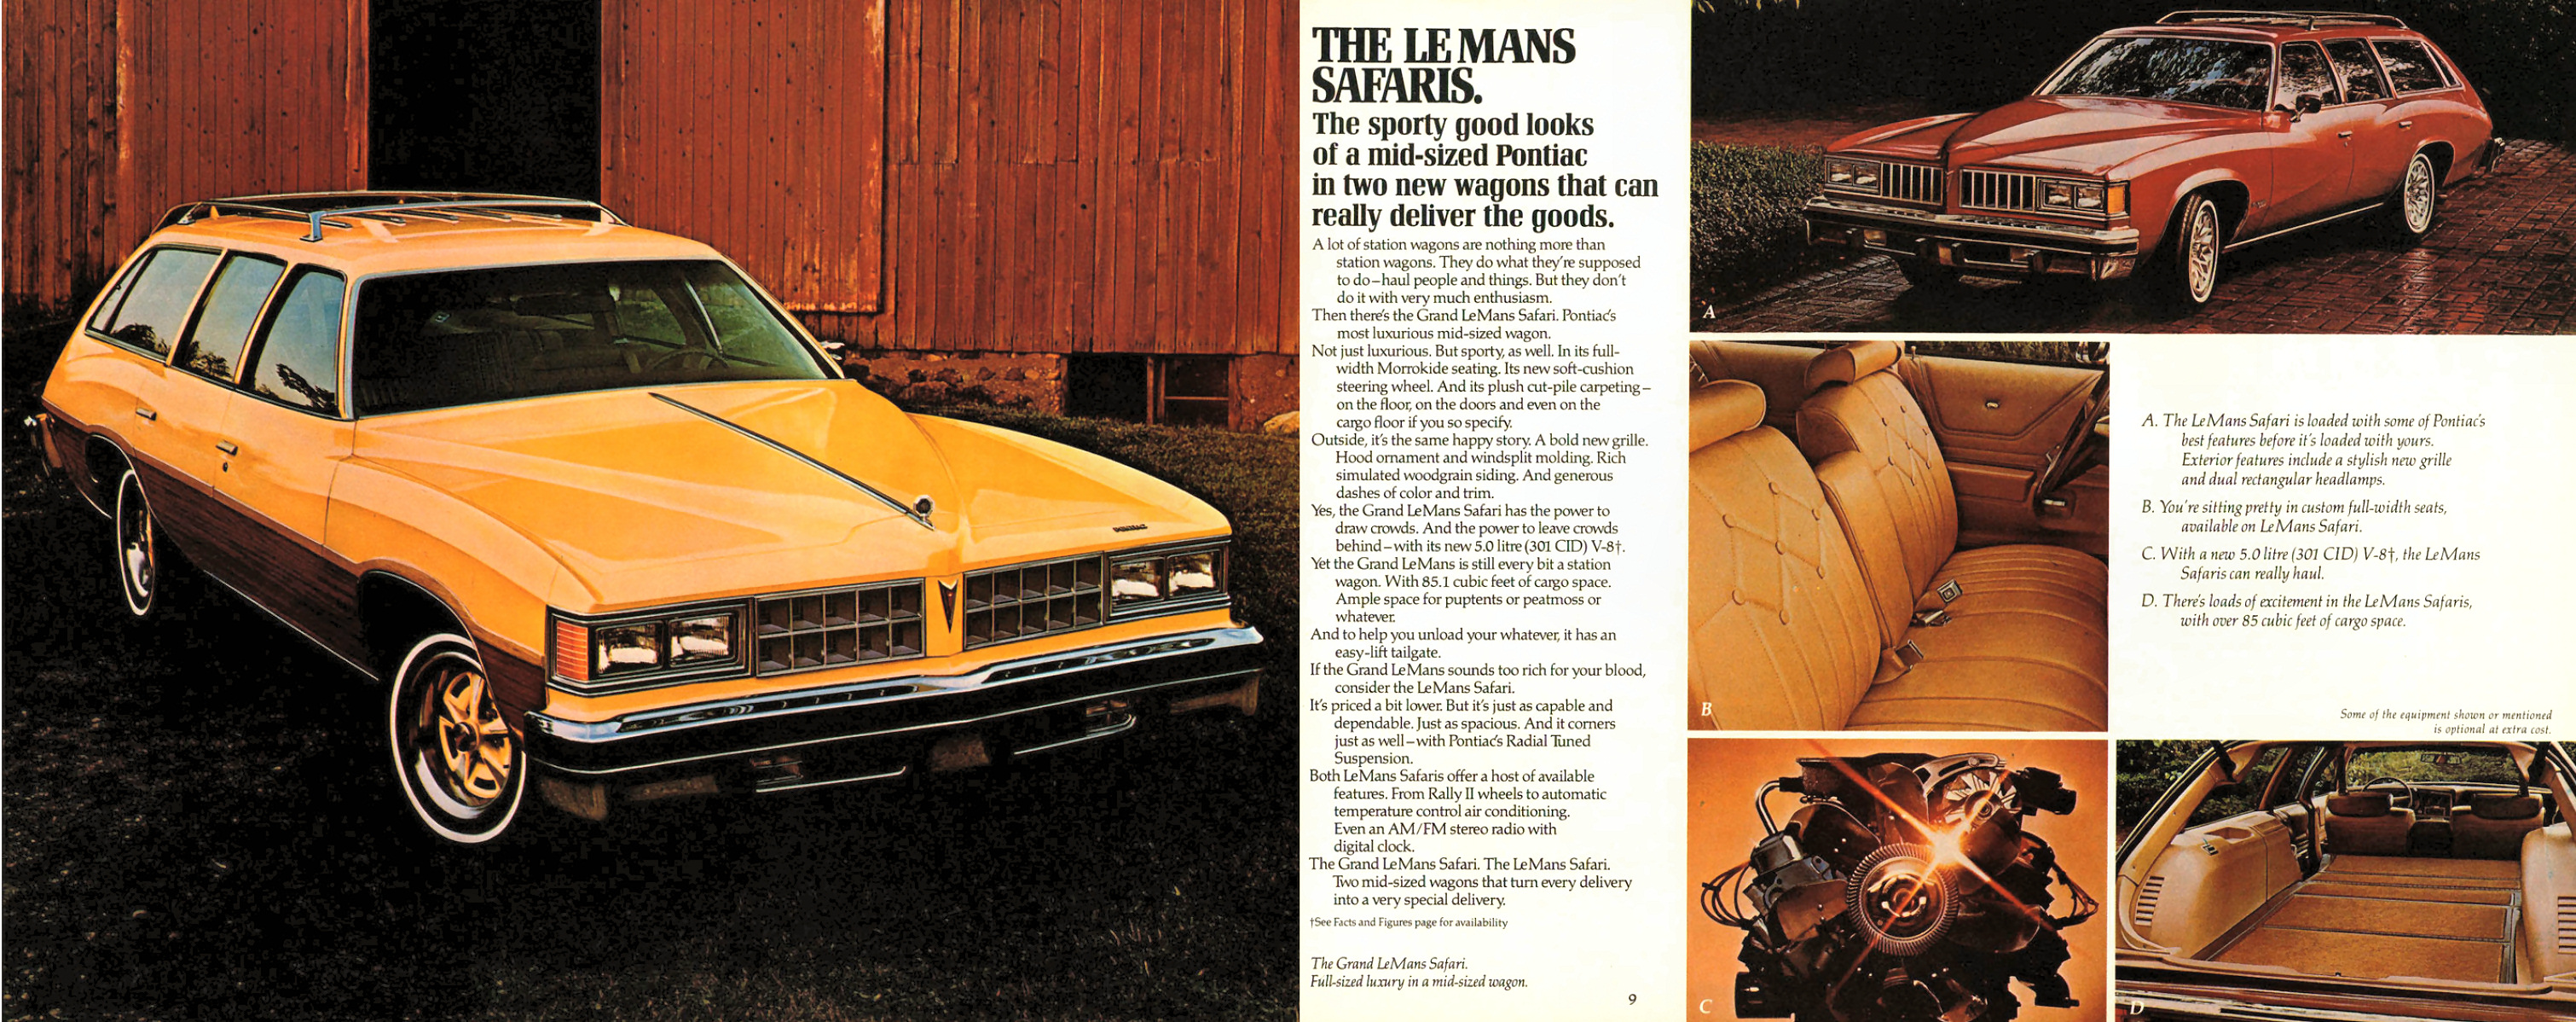 1977_Pontiac_Lemans_Cdn-08-09